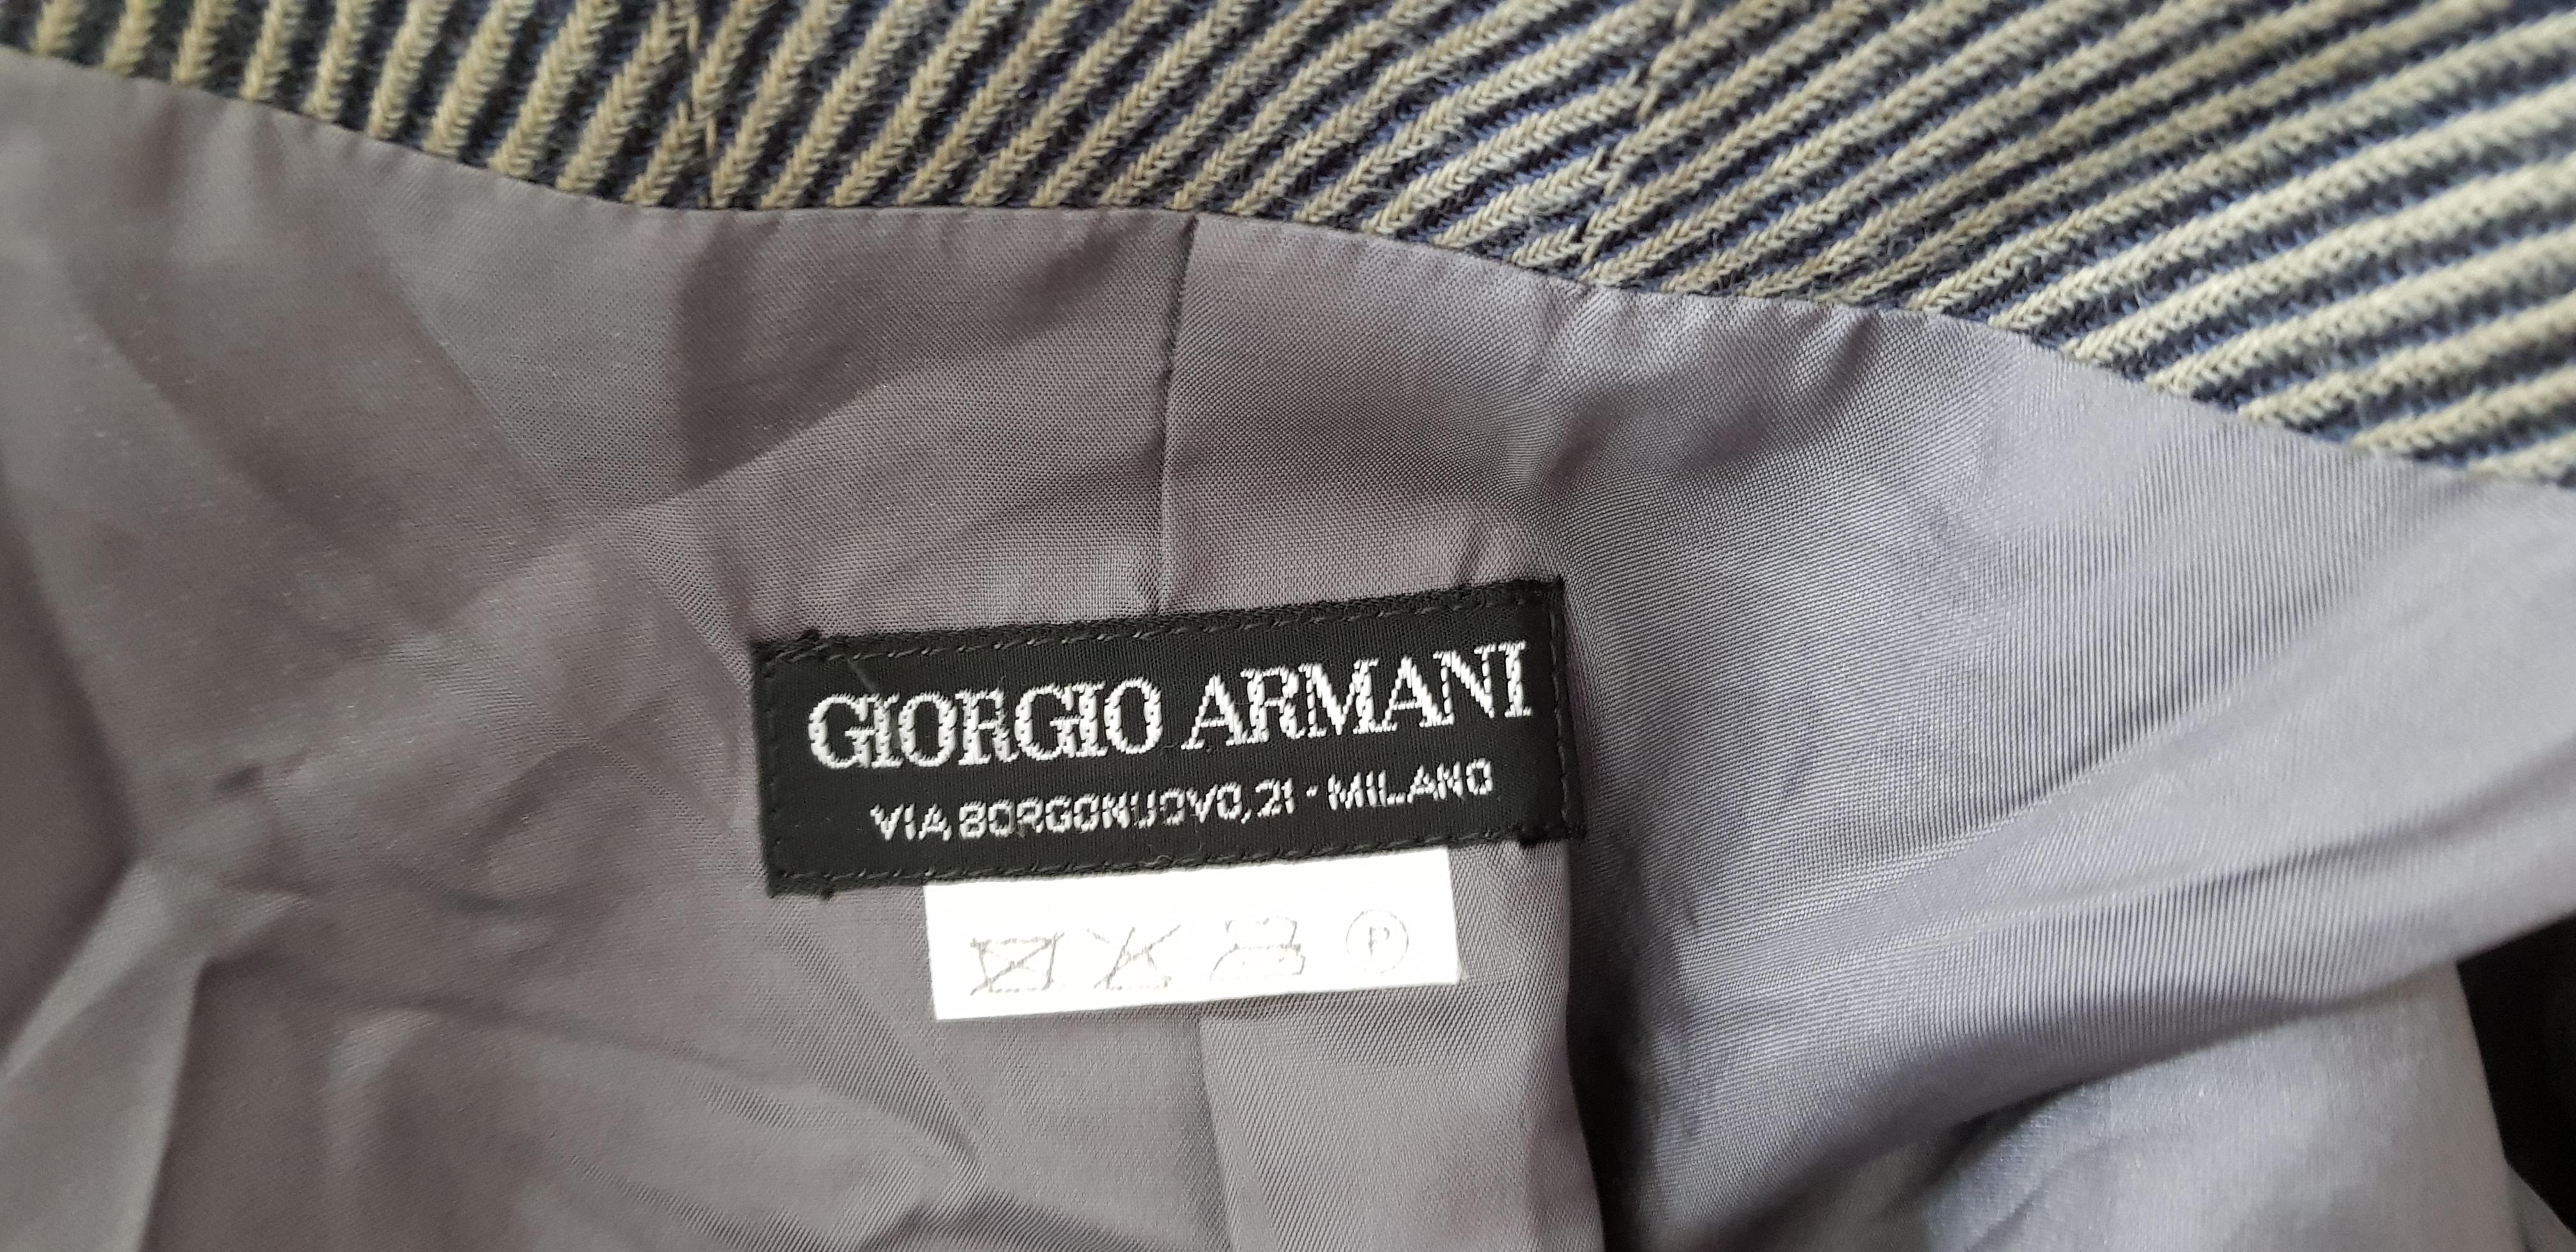 Giorgio ARMANI dark and light grey lines, jacket skirt wool suit - Unworn, New For Sale 4